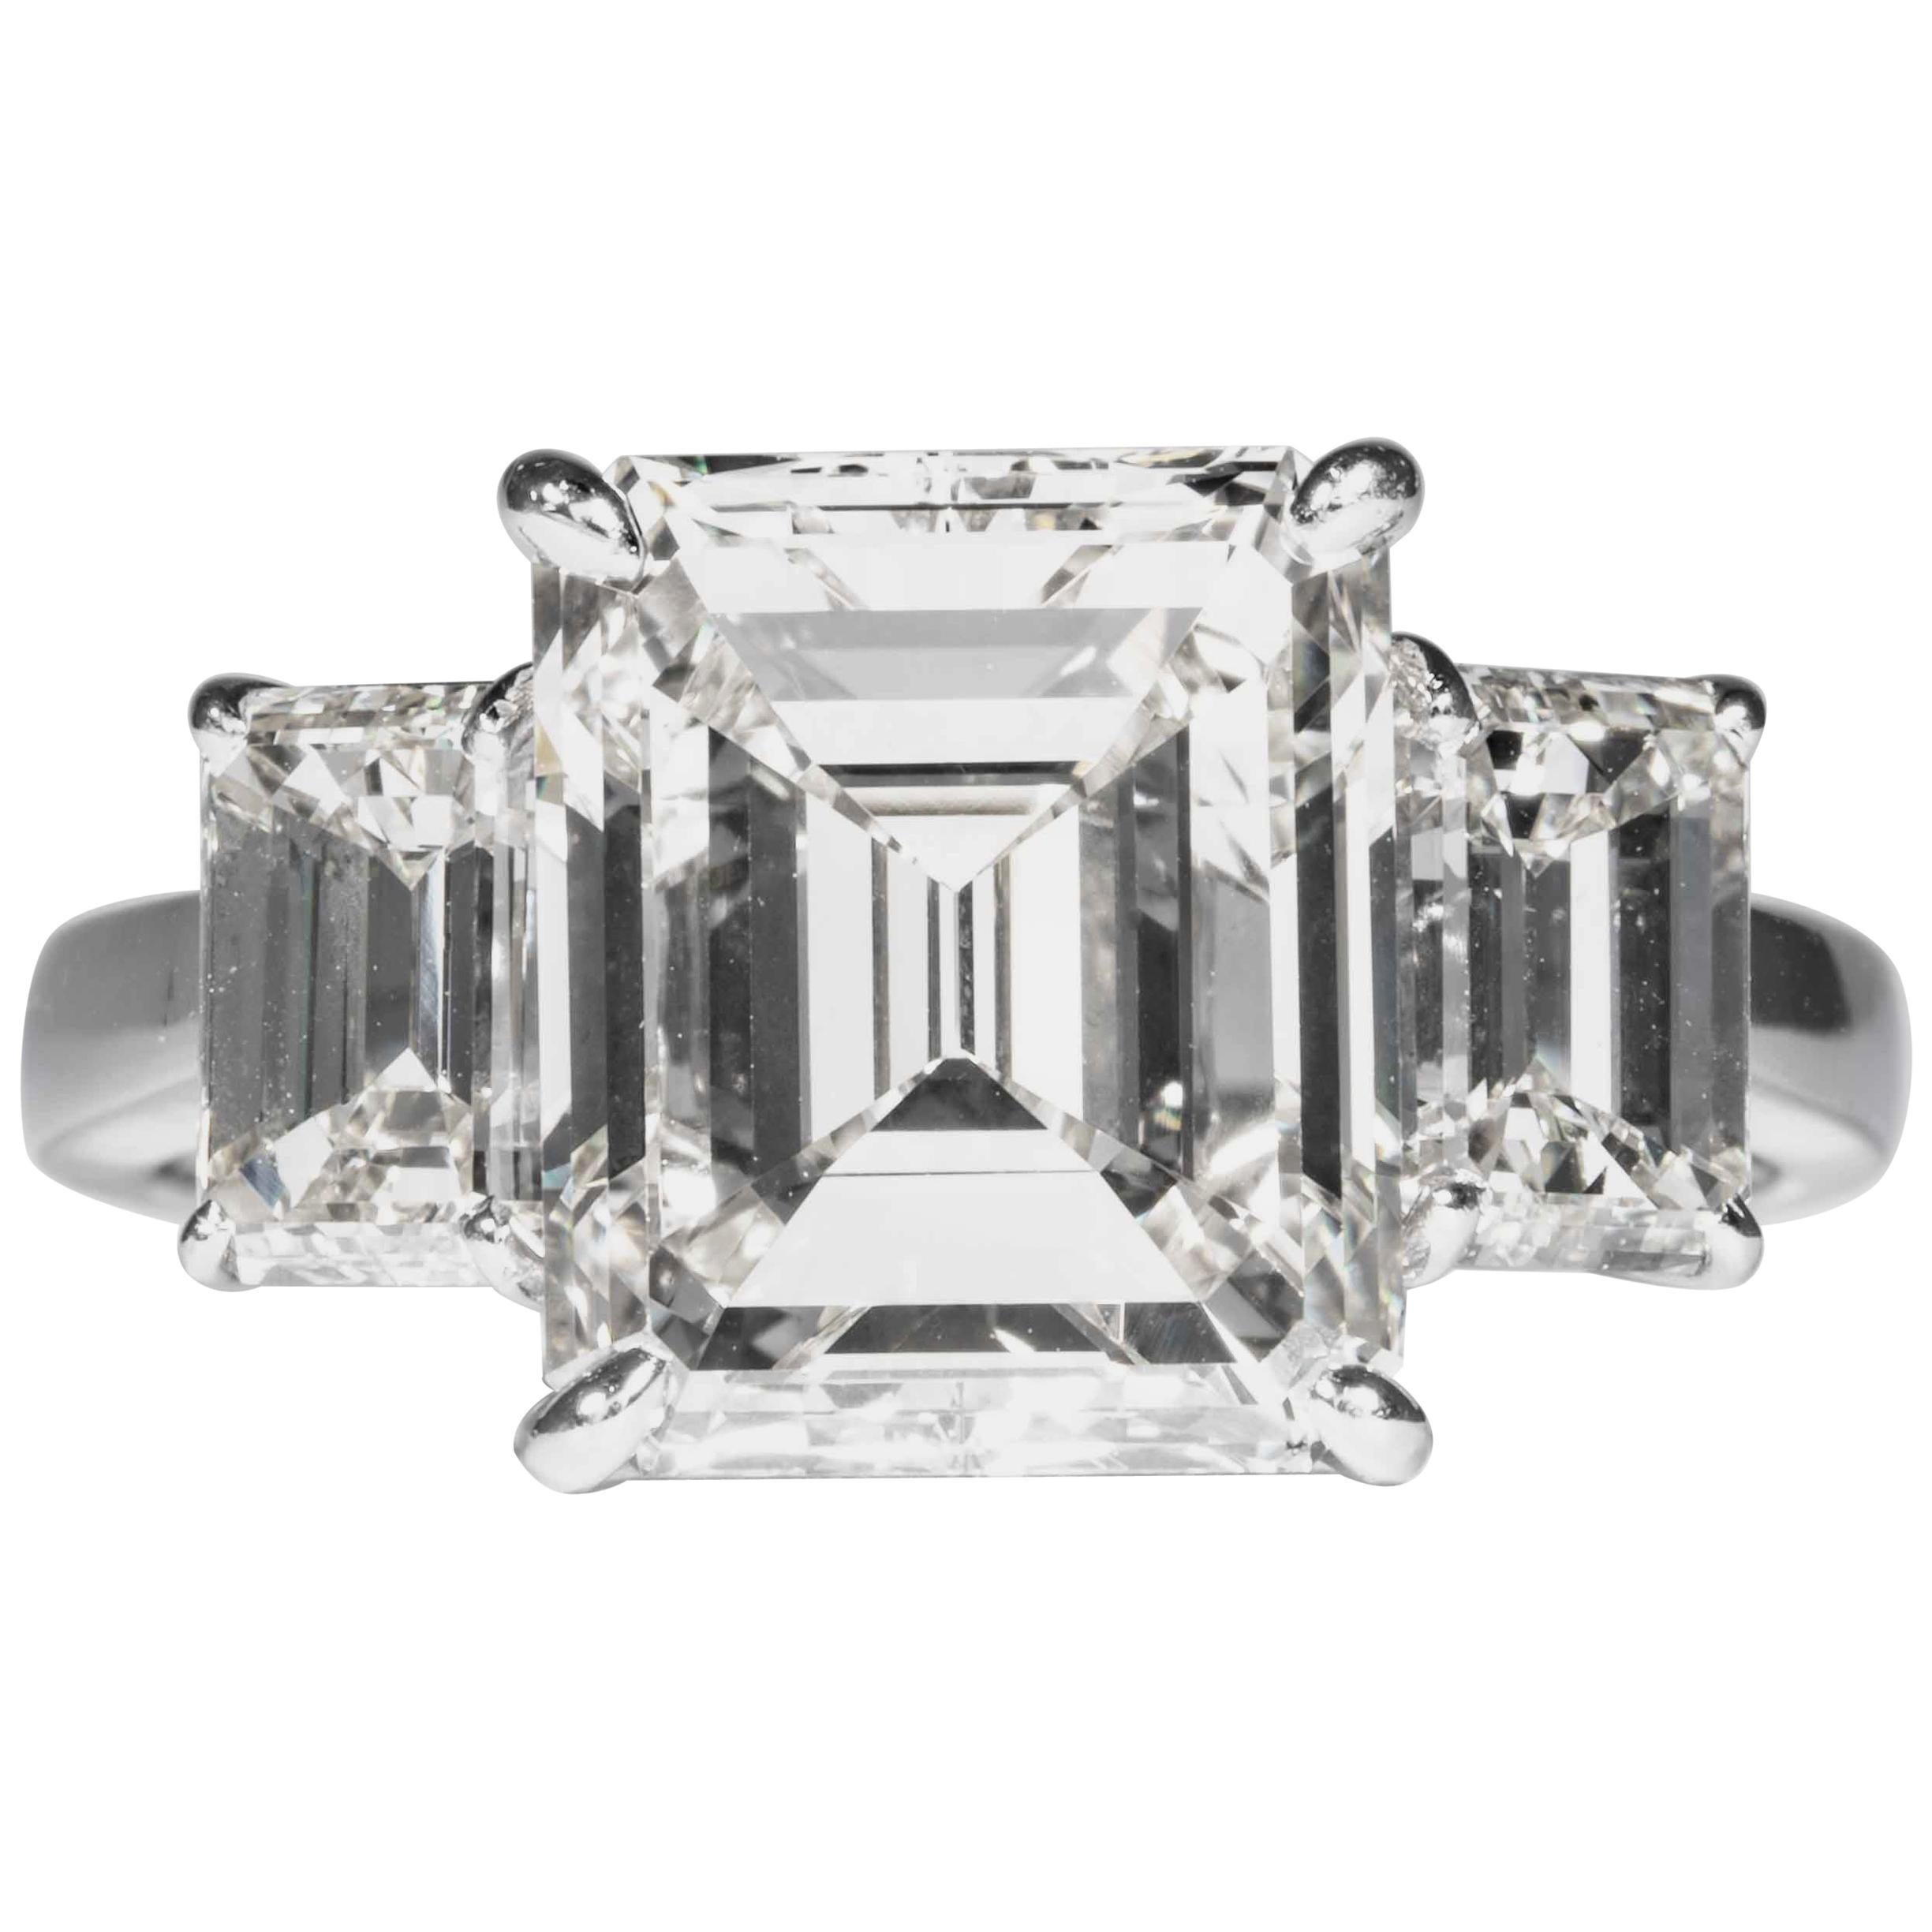 Shreve, Crump & Low GIA Certified 5.05 Carat J VVS2 Emerald Cut Diamond Ring